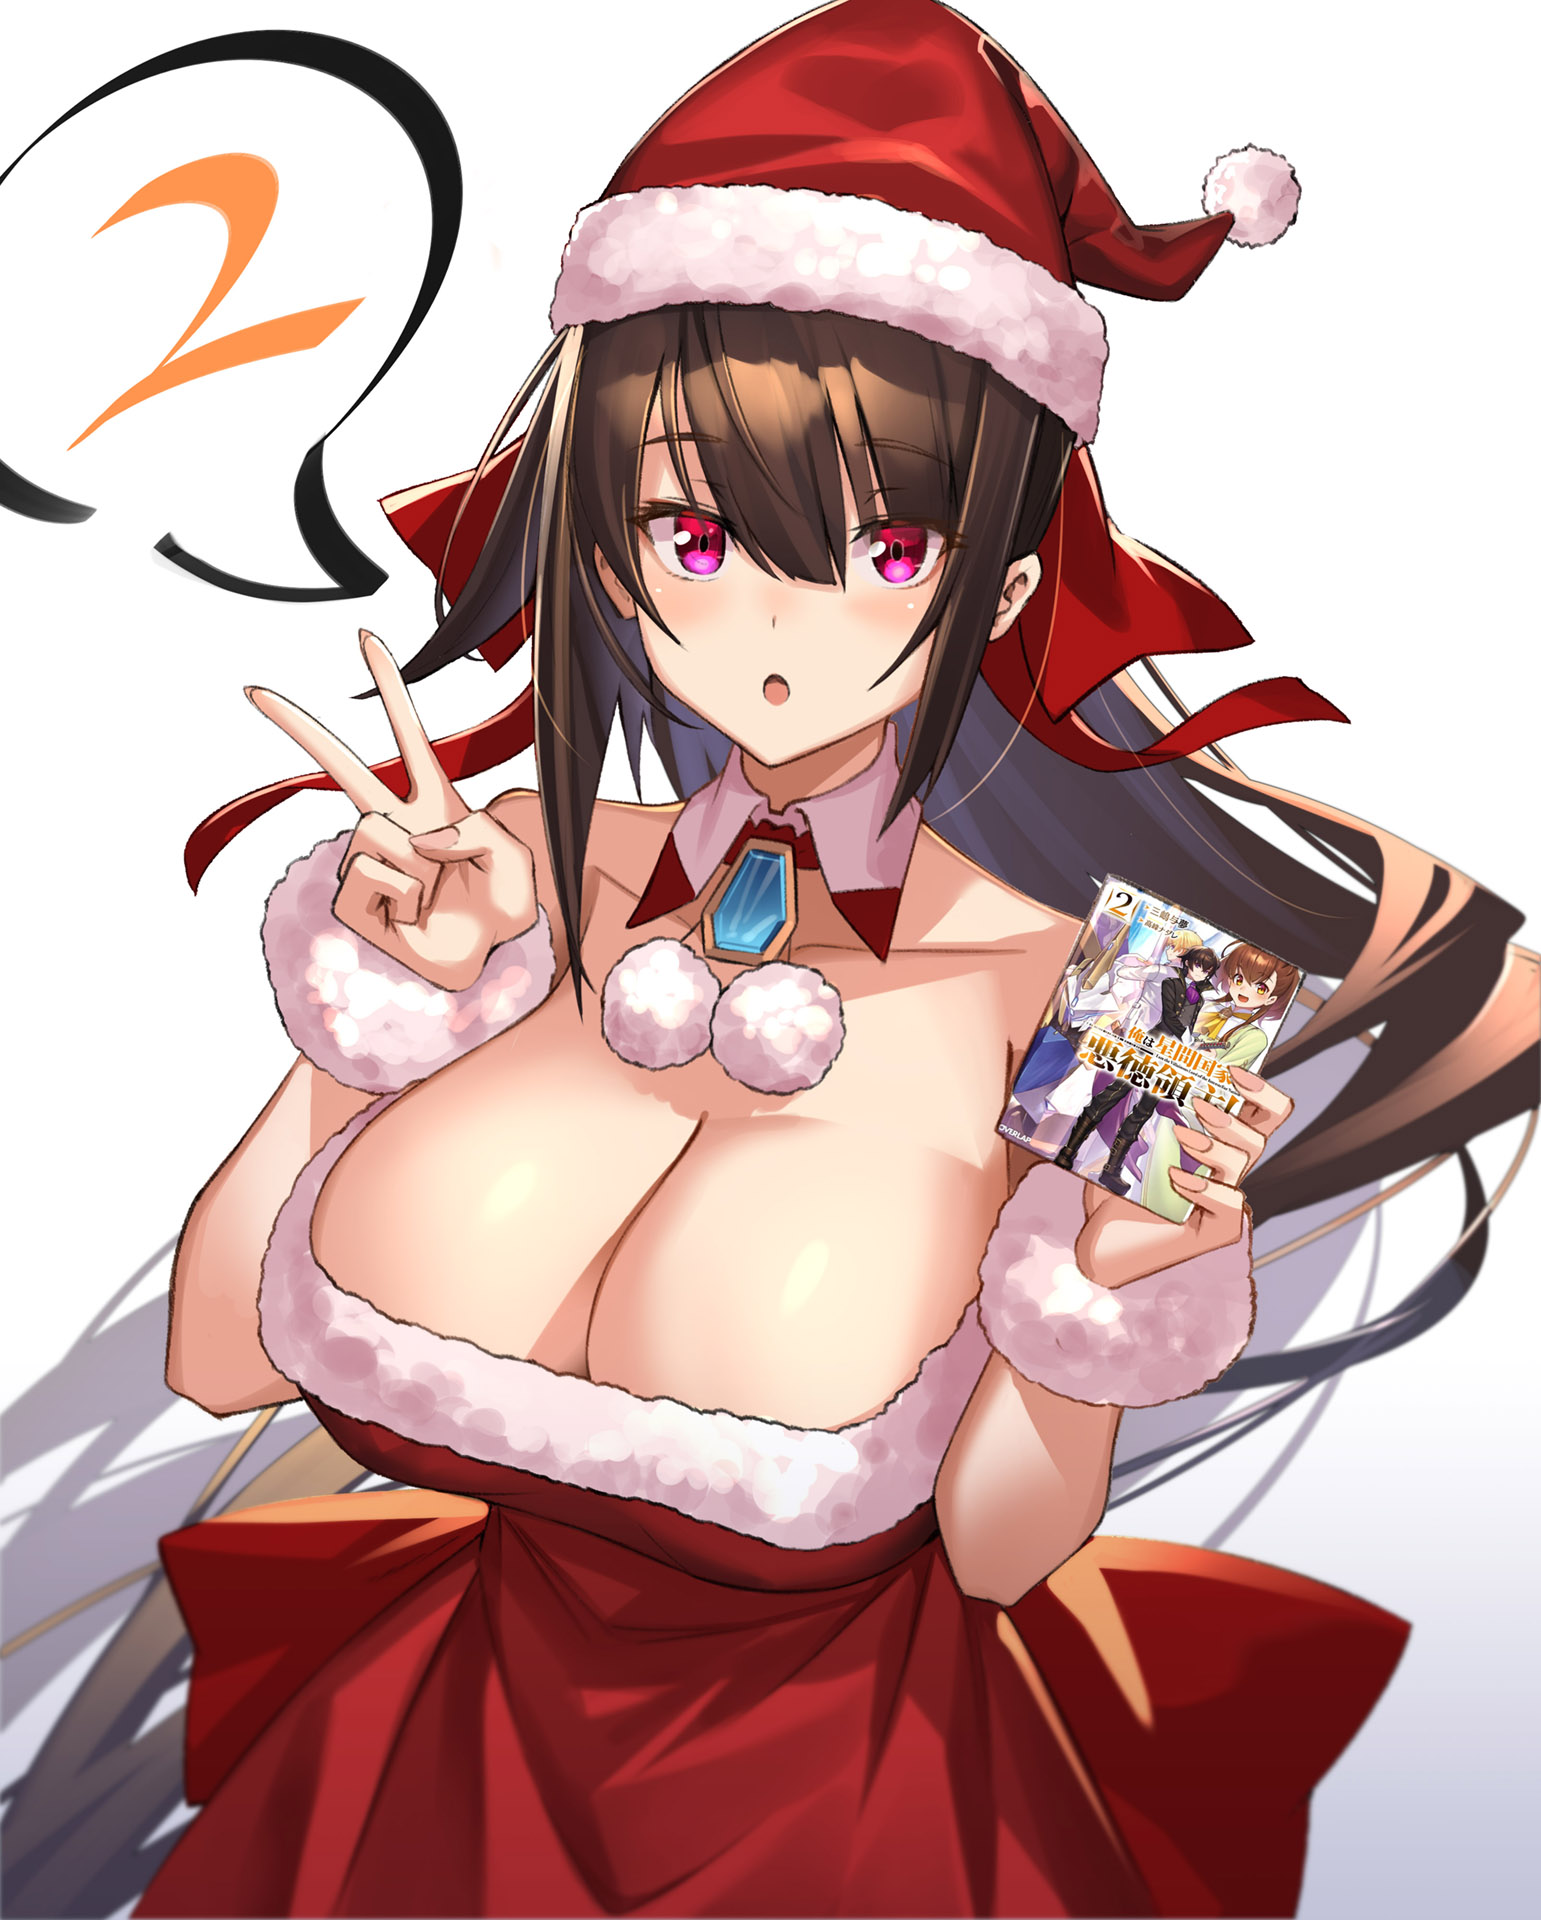 Anime 1541x1920 anime anime girls digital art artwork 2D portrait display cleavage Santa costume big boobs Santa girl Santa hats bare shoulders brunette pink eyes blushing Nadare-san